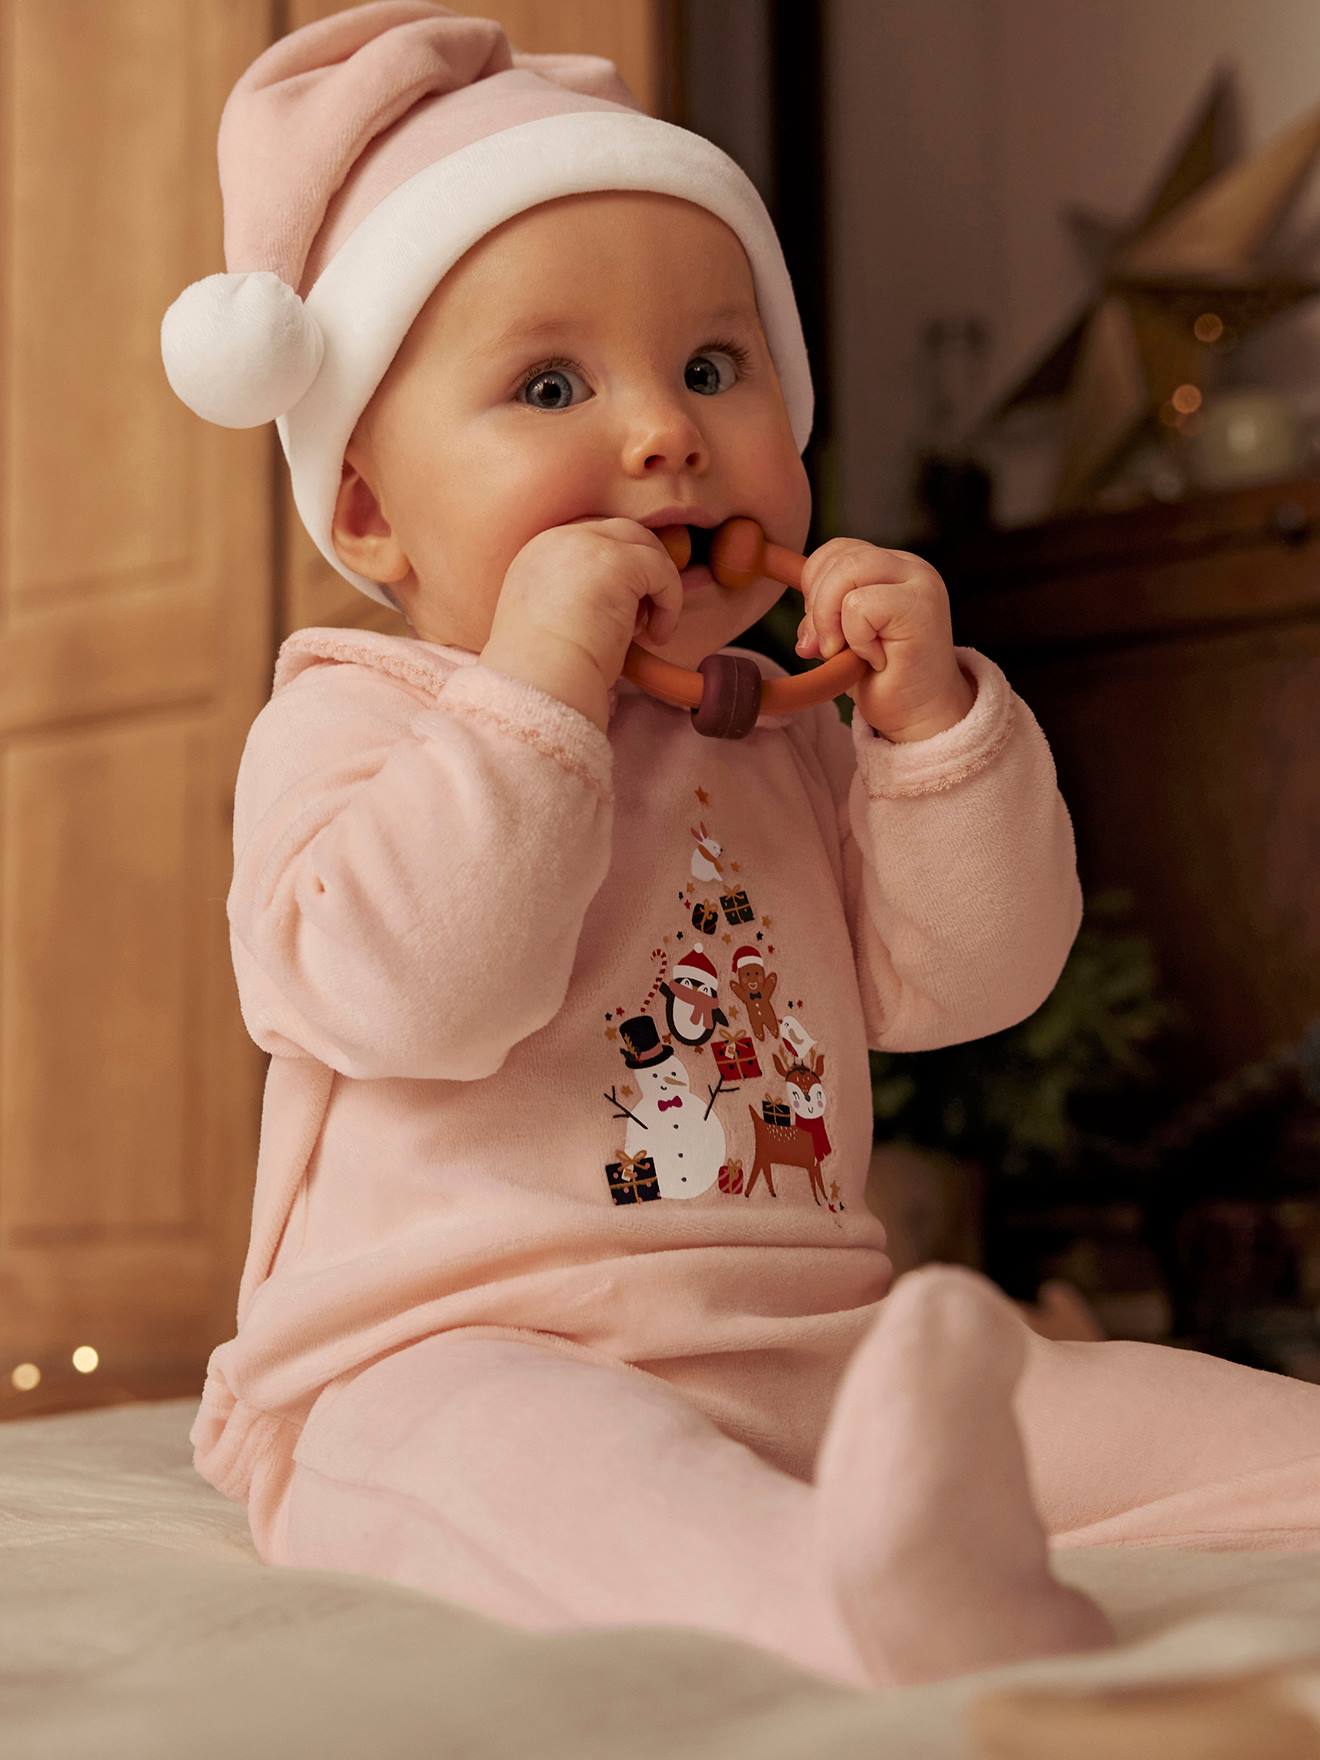 pyjama bebe fille special noel avec bonnet rouge bebe